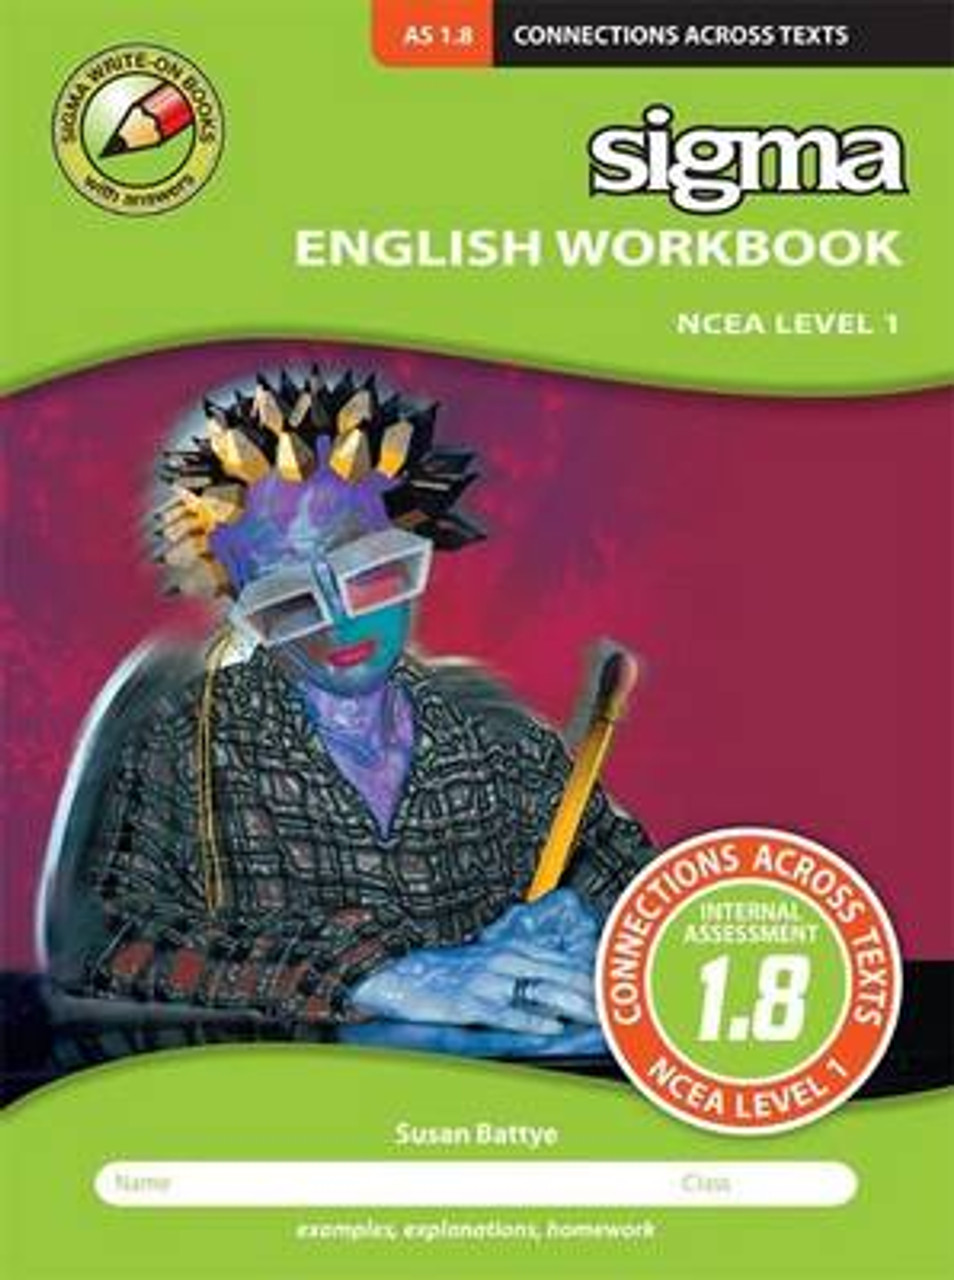 English　Level　Eton　Press　NCEA　Workbook　1.8